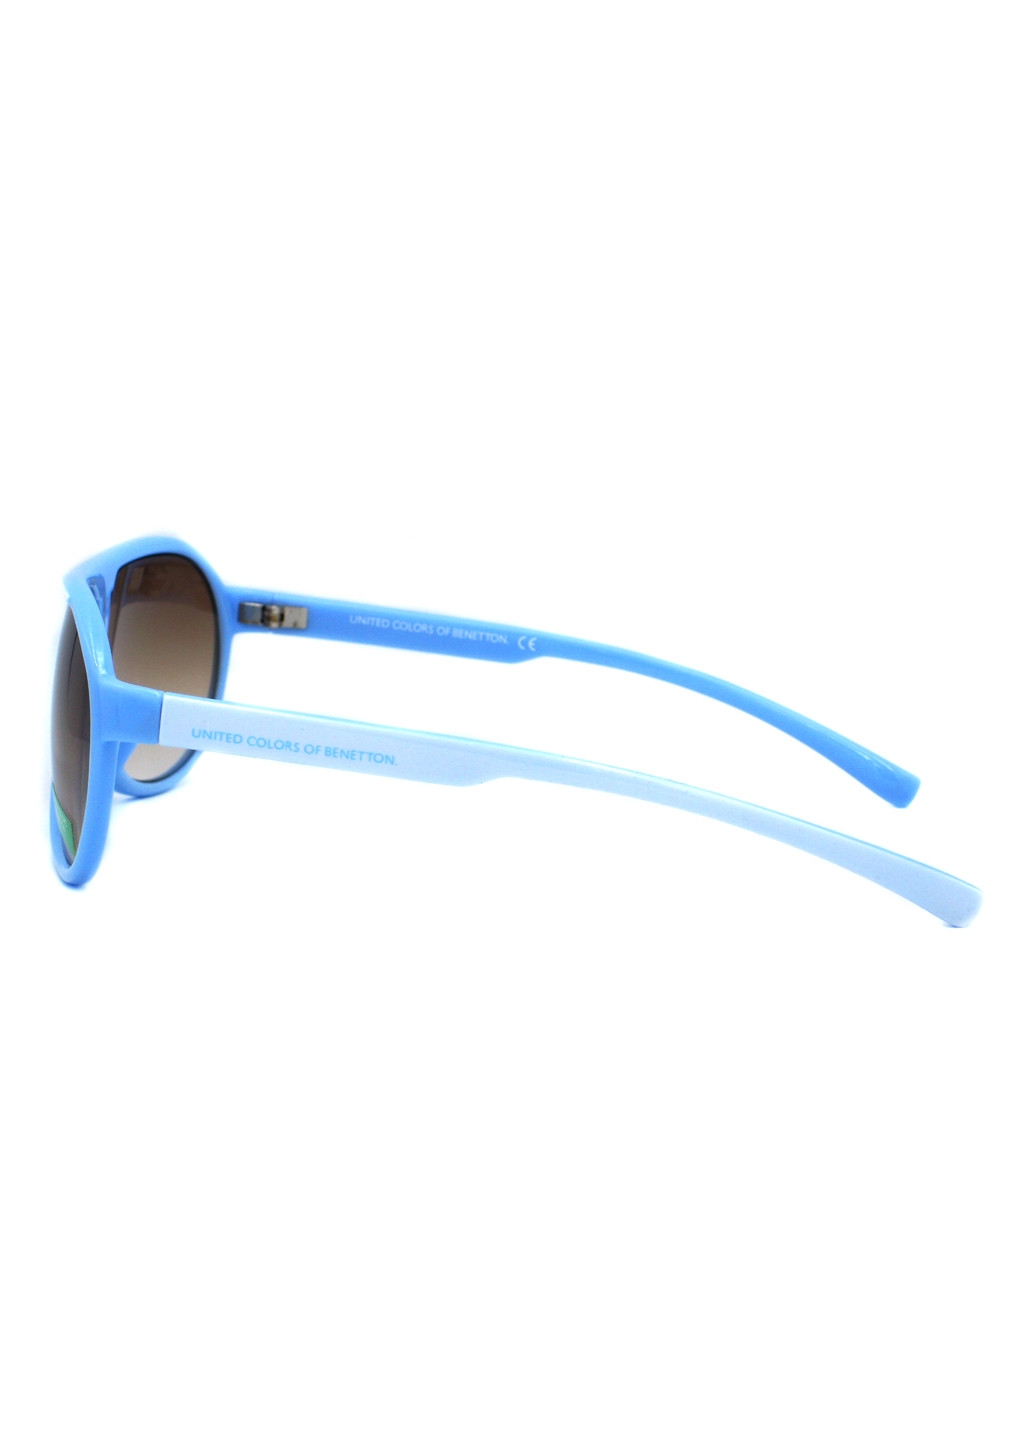 Сонцезахиснi окуляри United Colors of Benetton bb524s (260946916)